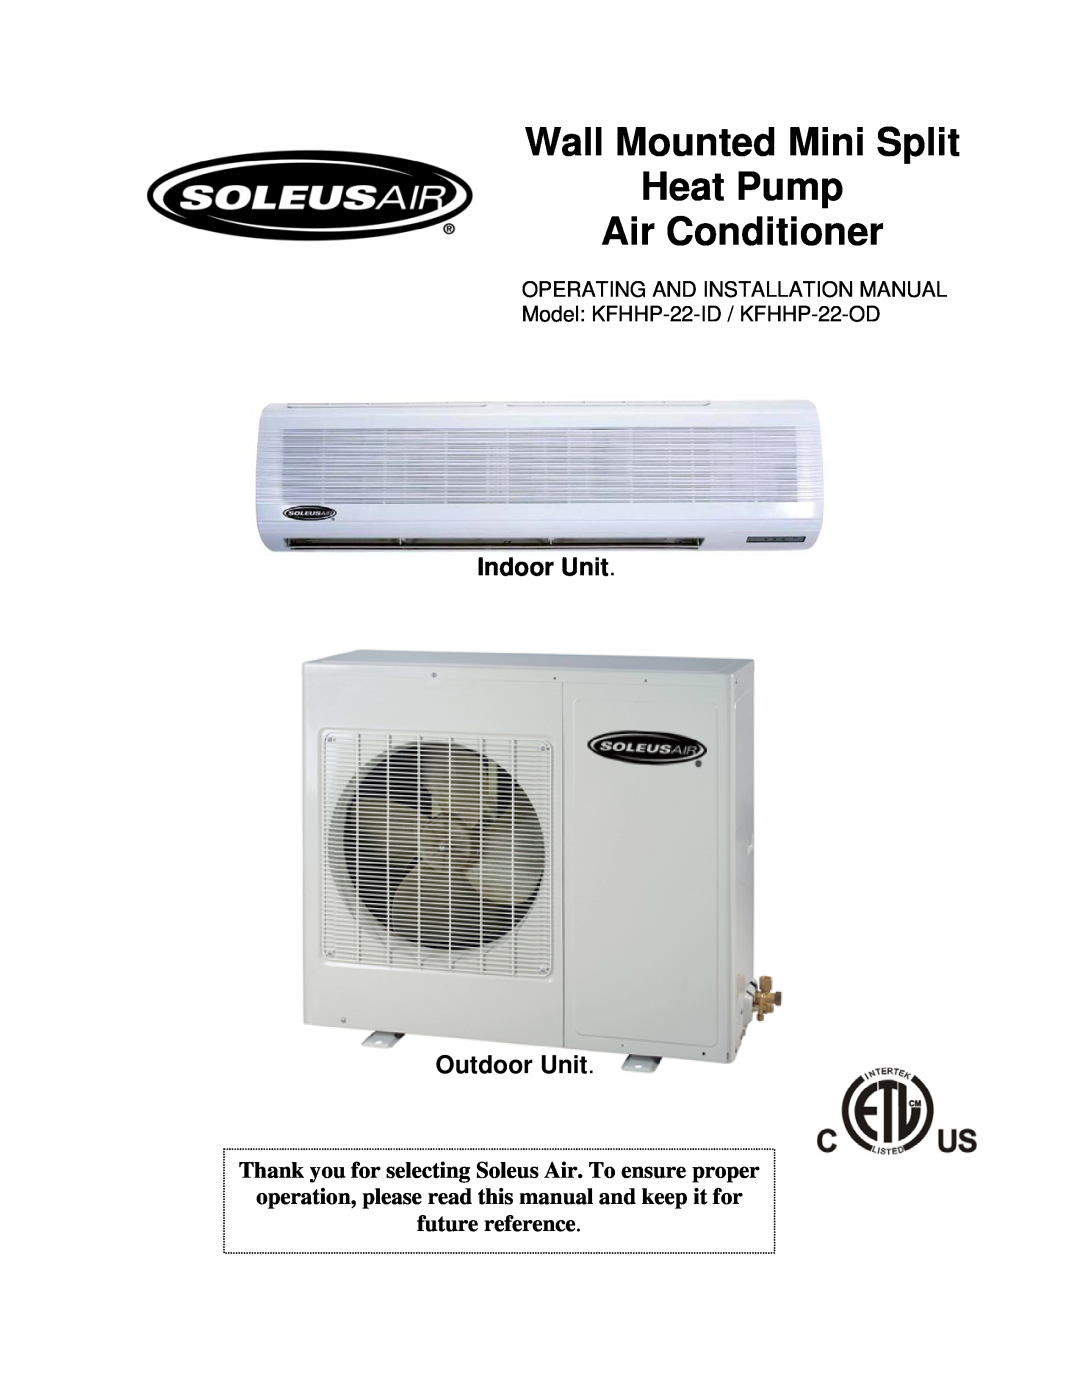 Soleus Air KFHHP-22-ID installation manual Indoor Unit Outdoor Unit, Wall Mounted Mini Split Heat Pump Air Conditioner 